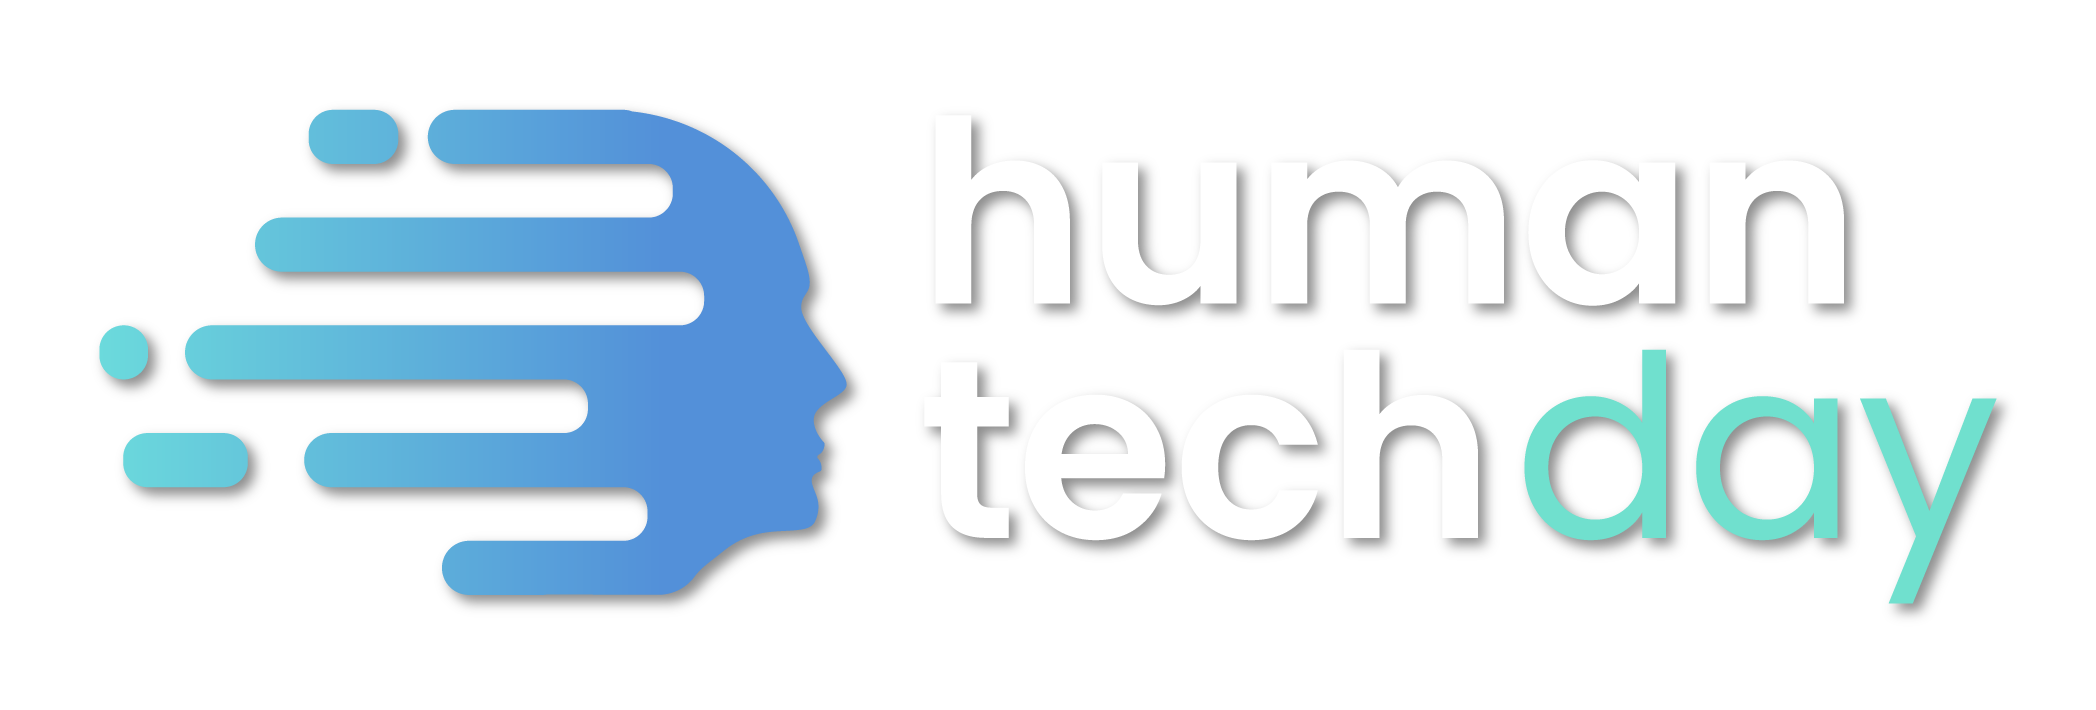 Human Tech Day 2021